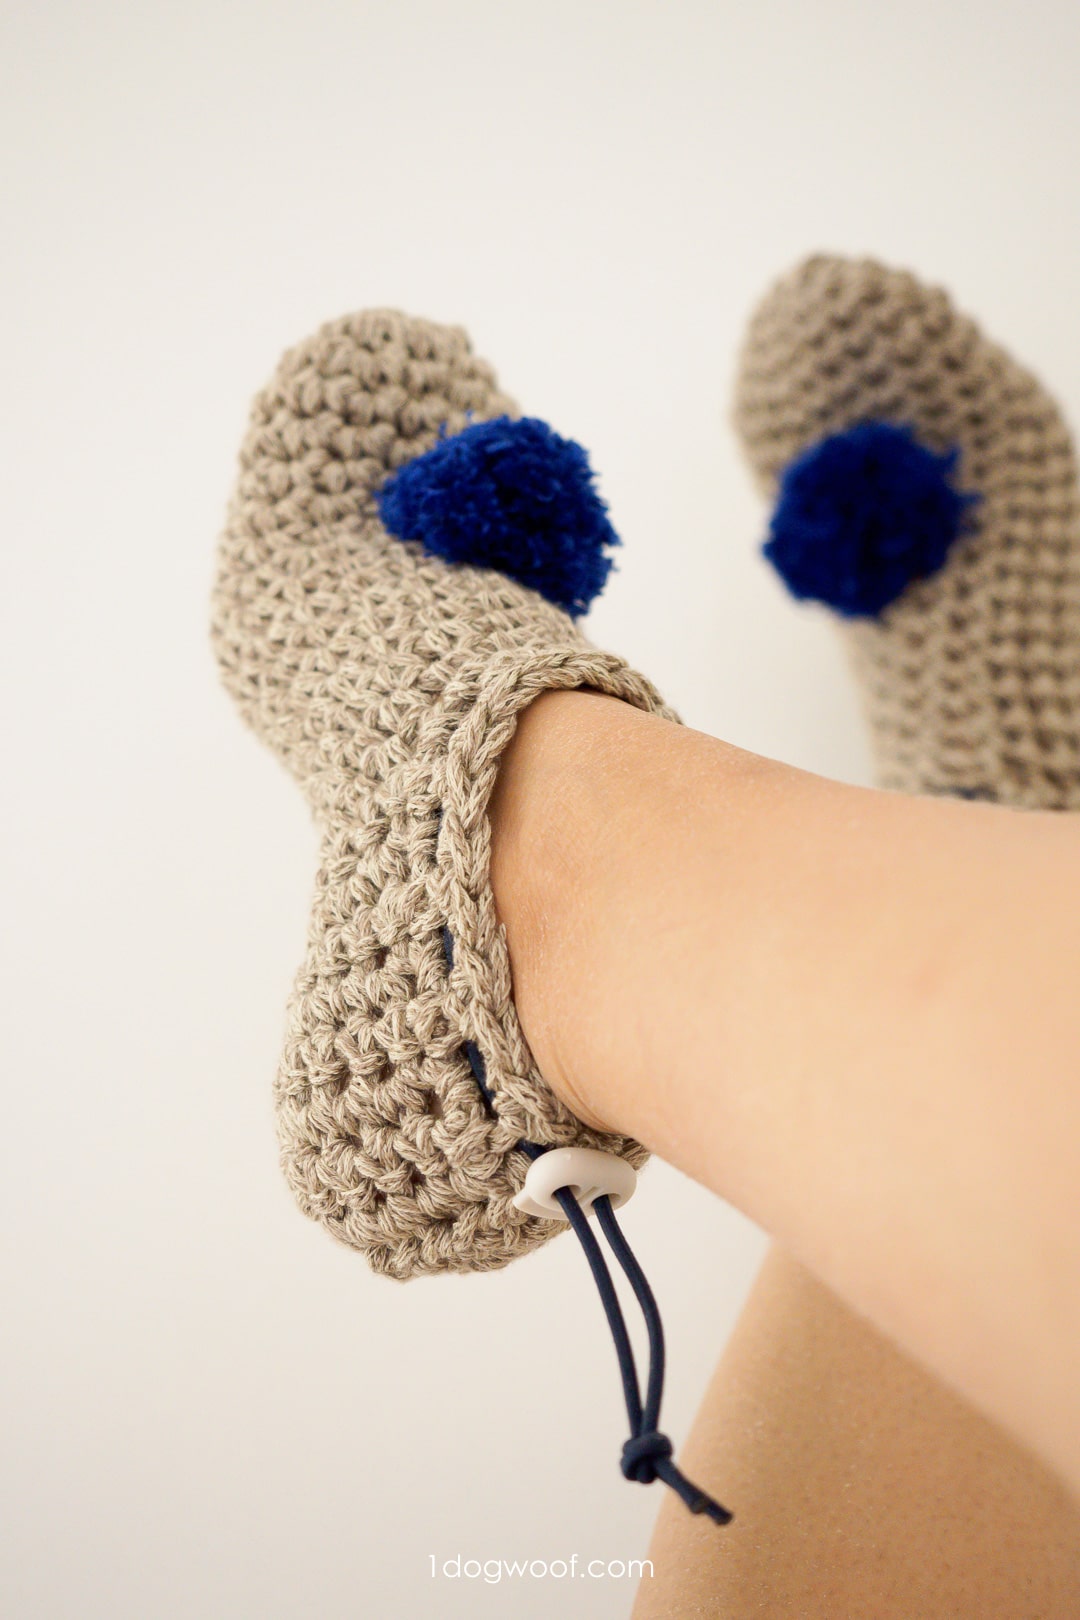 adjustable closure on the heel of the crochet slipper